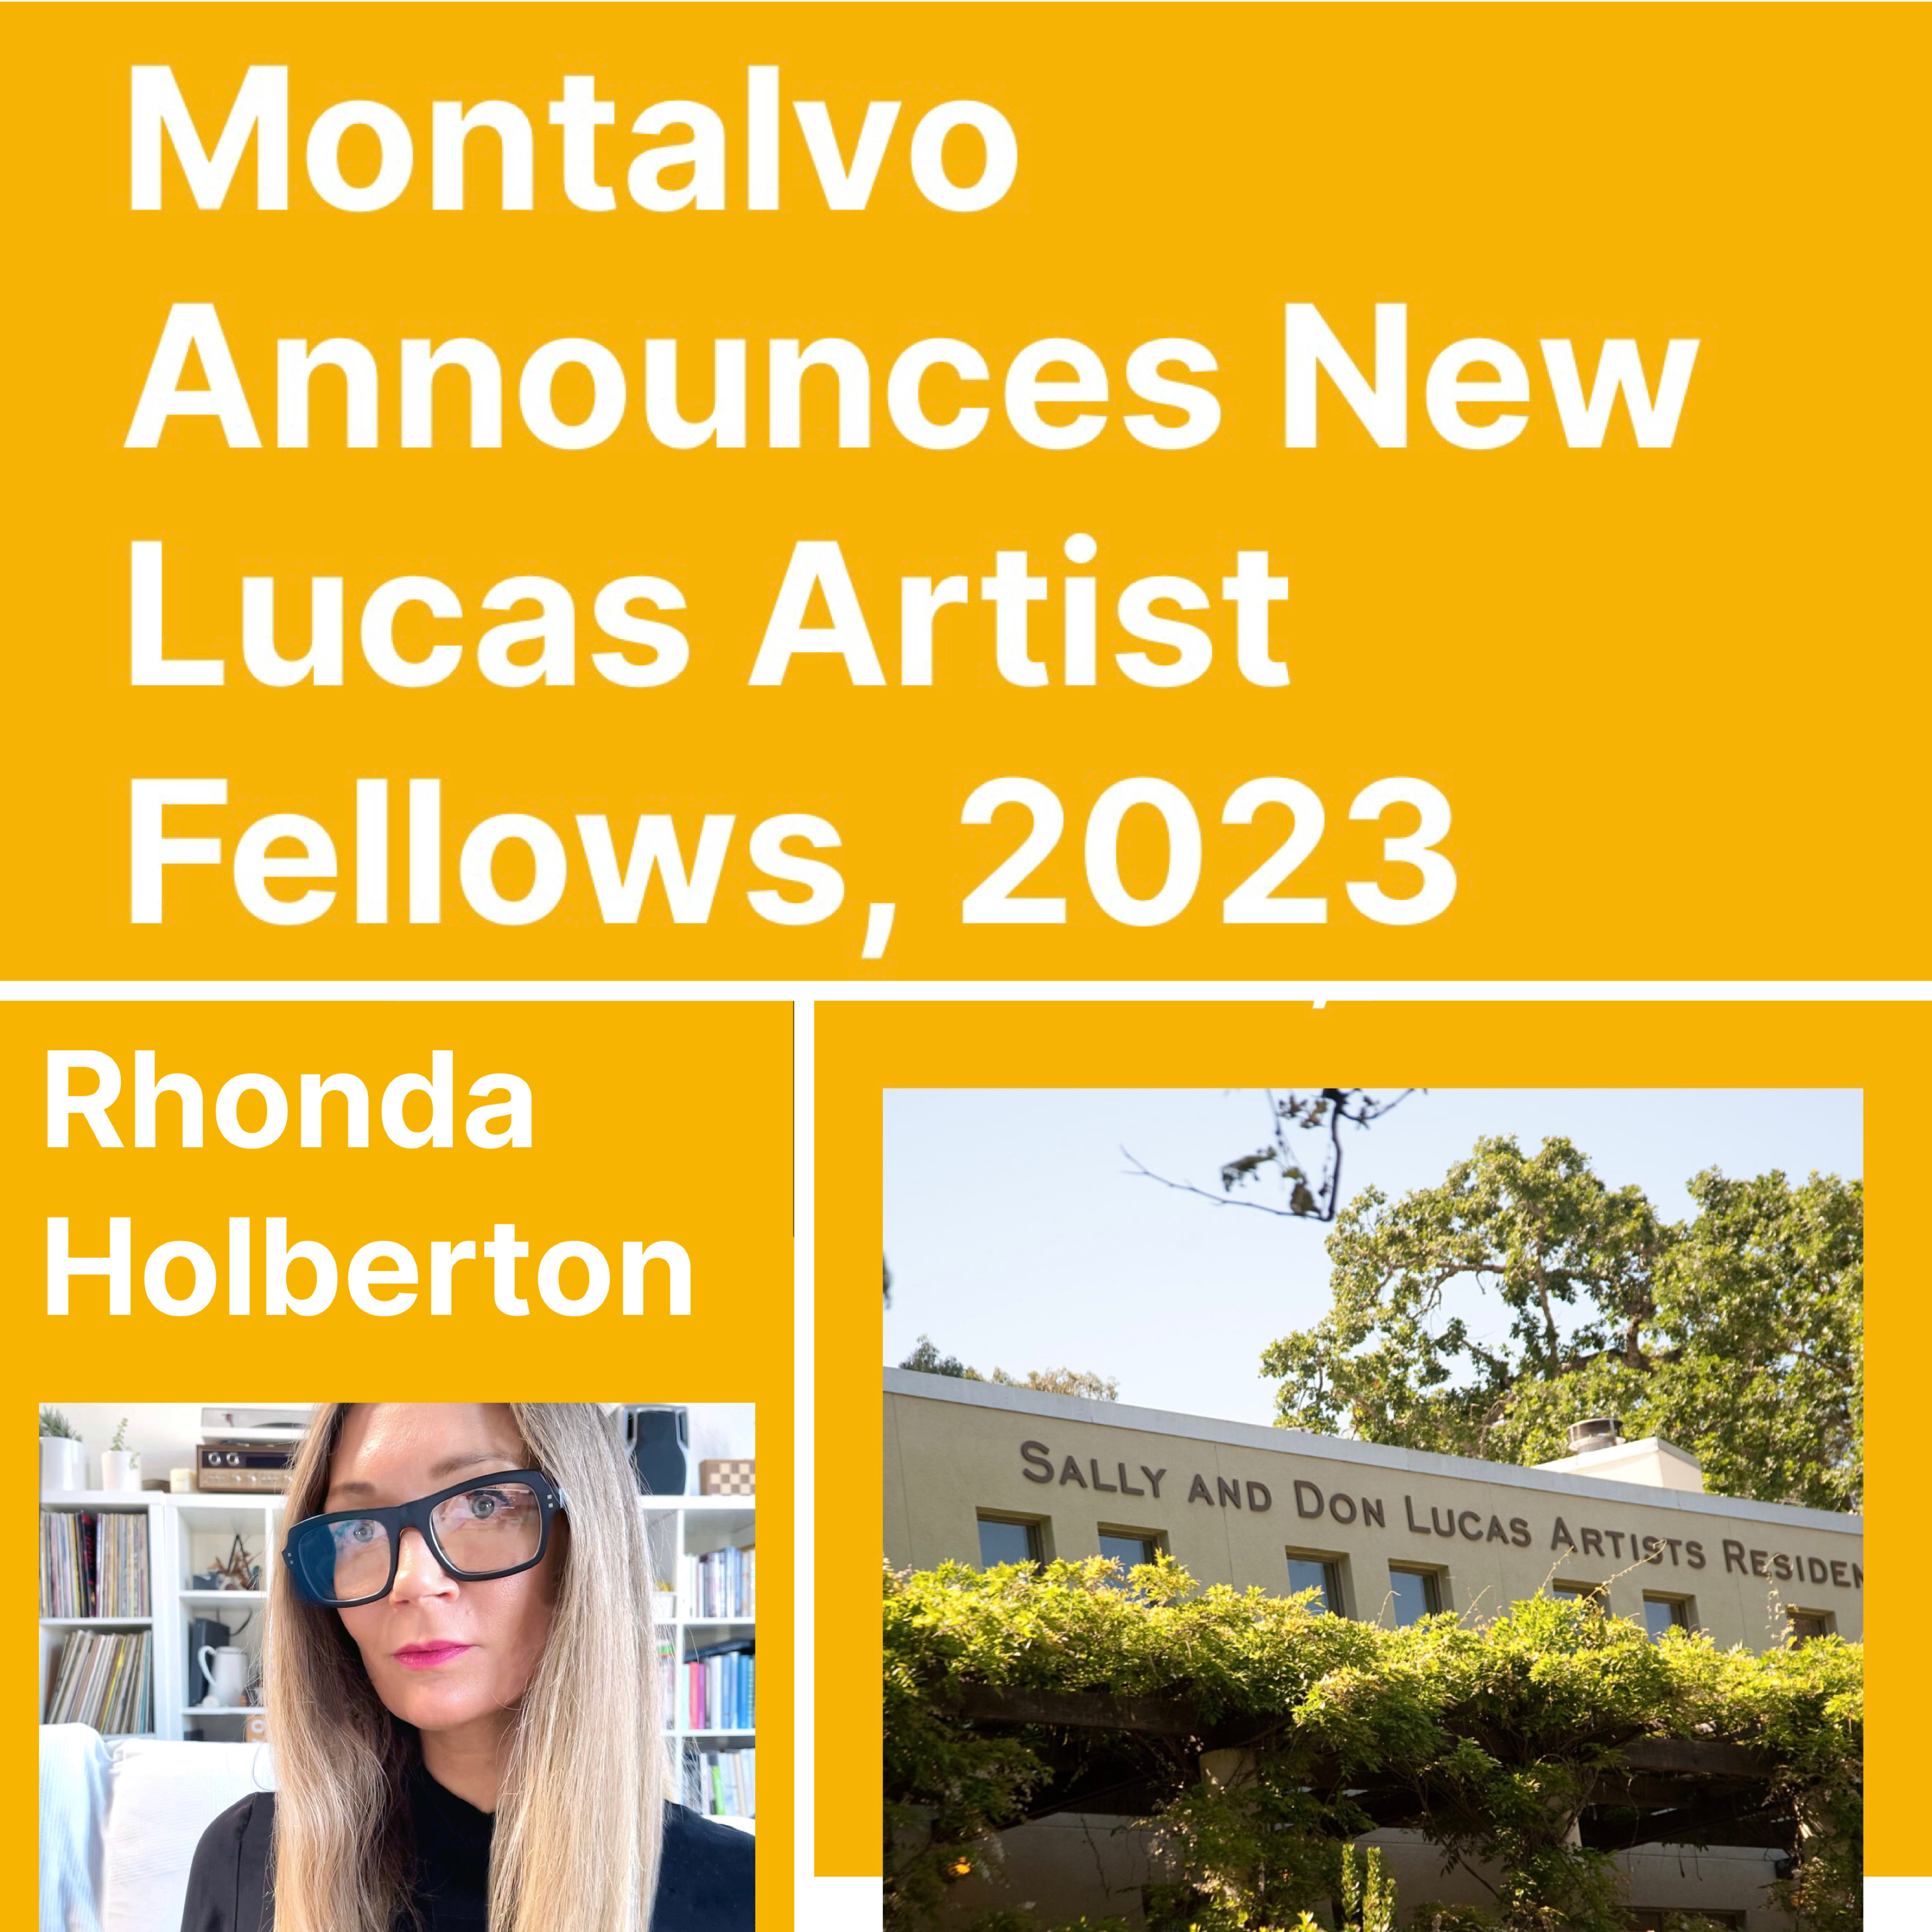 Rhonda Holberton, Associate Professor of Digital Media Art, was selected for Montalvo Arts Center’s Sally and Don Lucas Artists Program (LAP) fellowship.